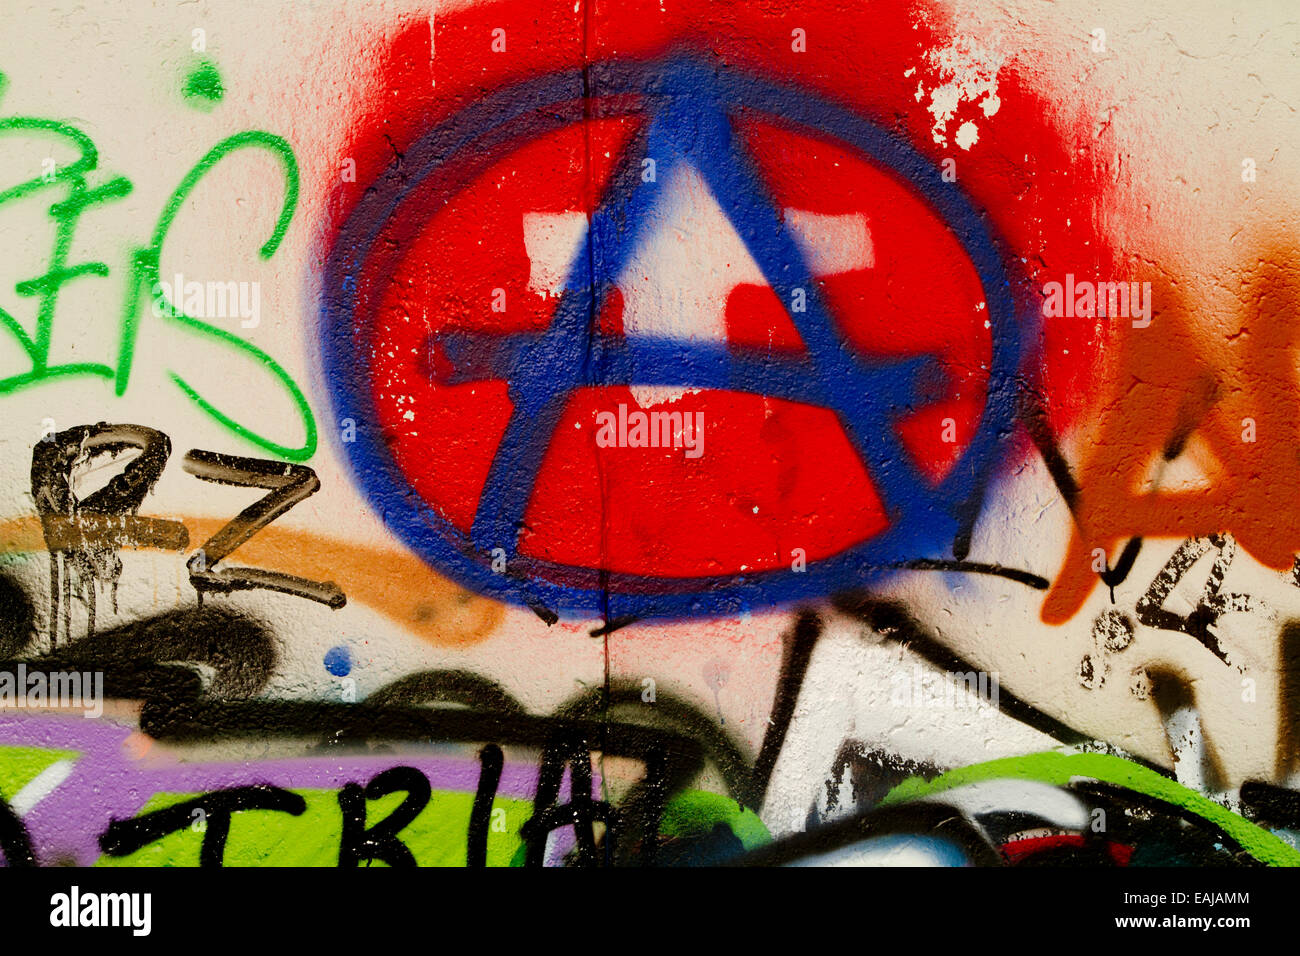 Graffiti tag art urban Berlin Wall anarchy red A Stock Photo